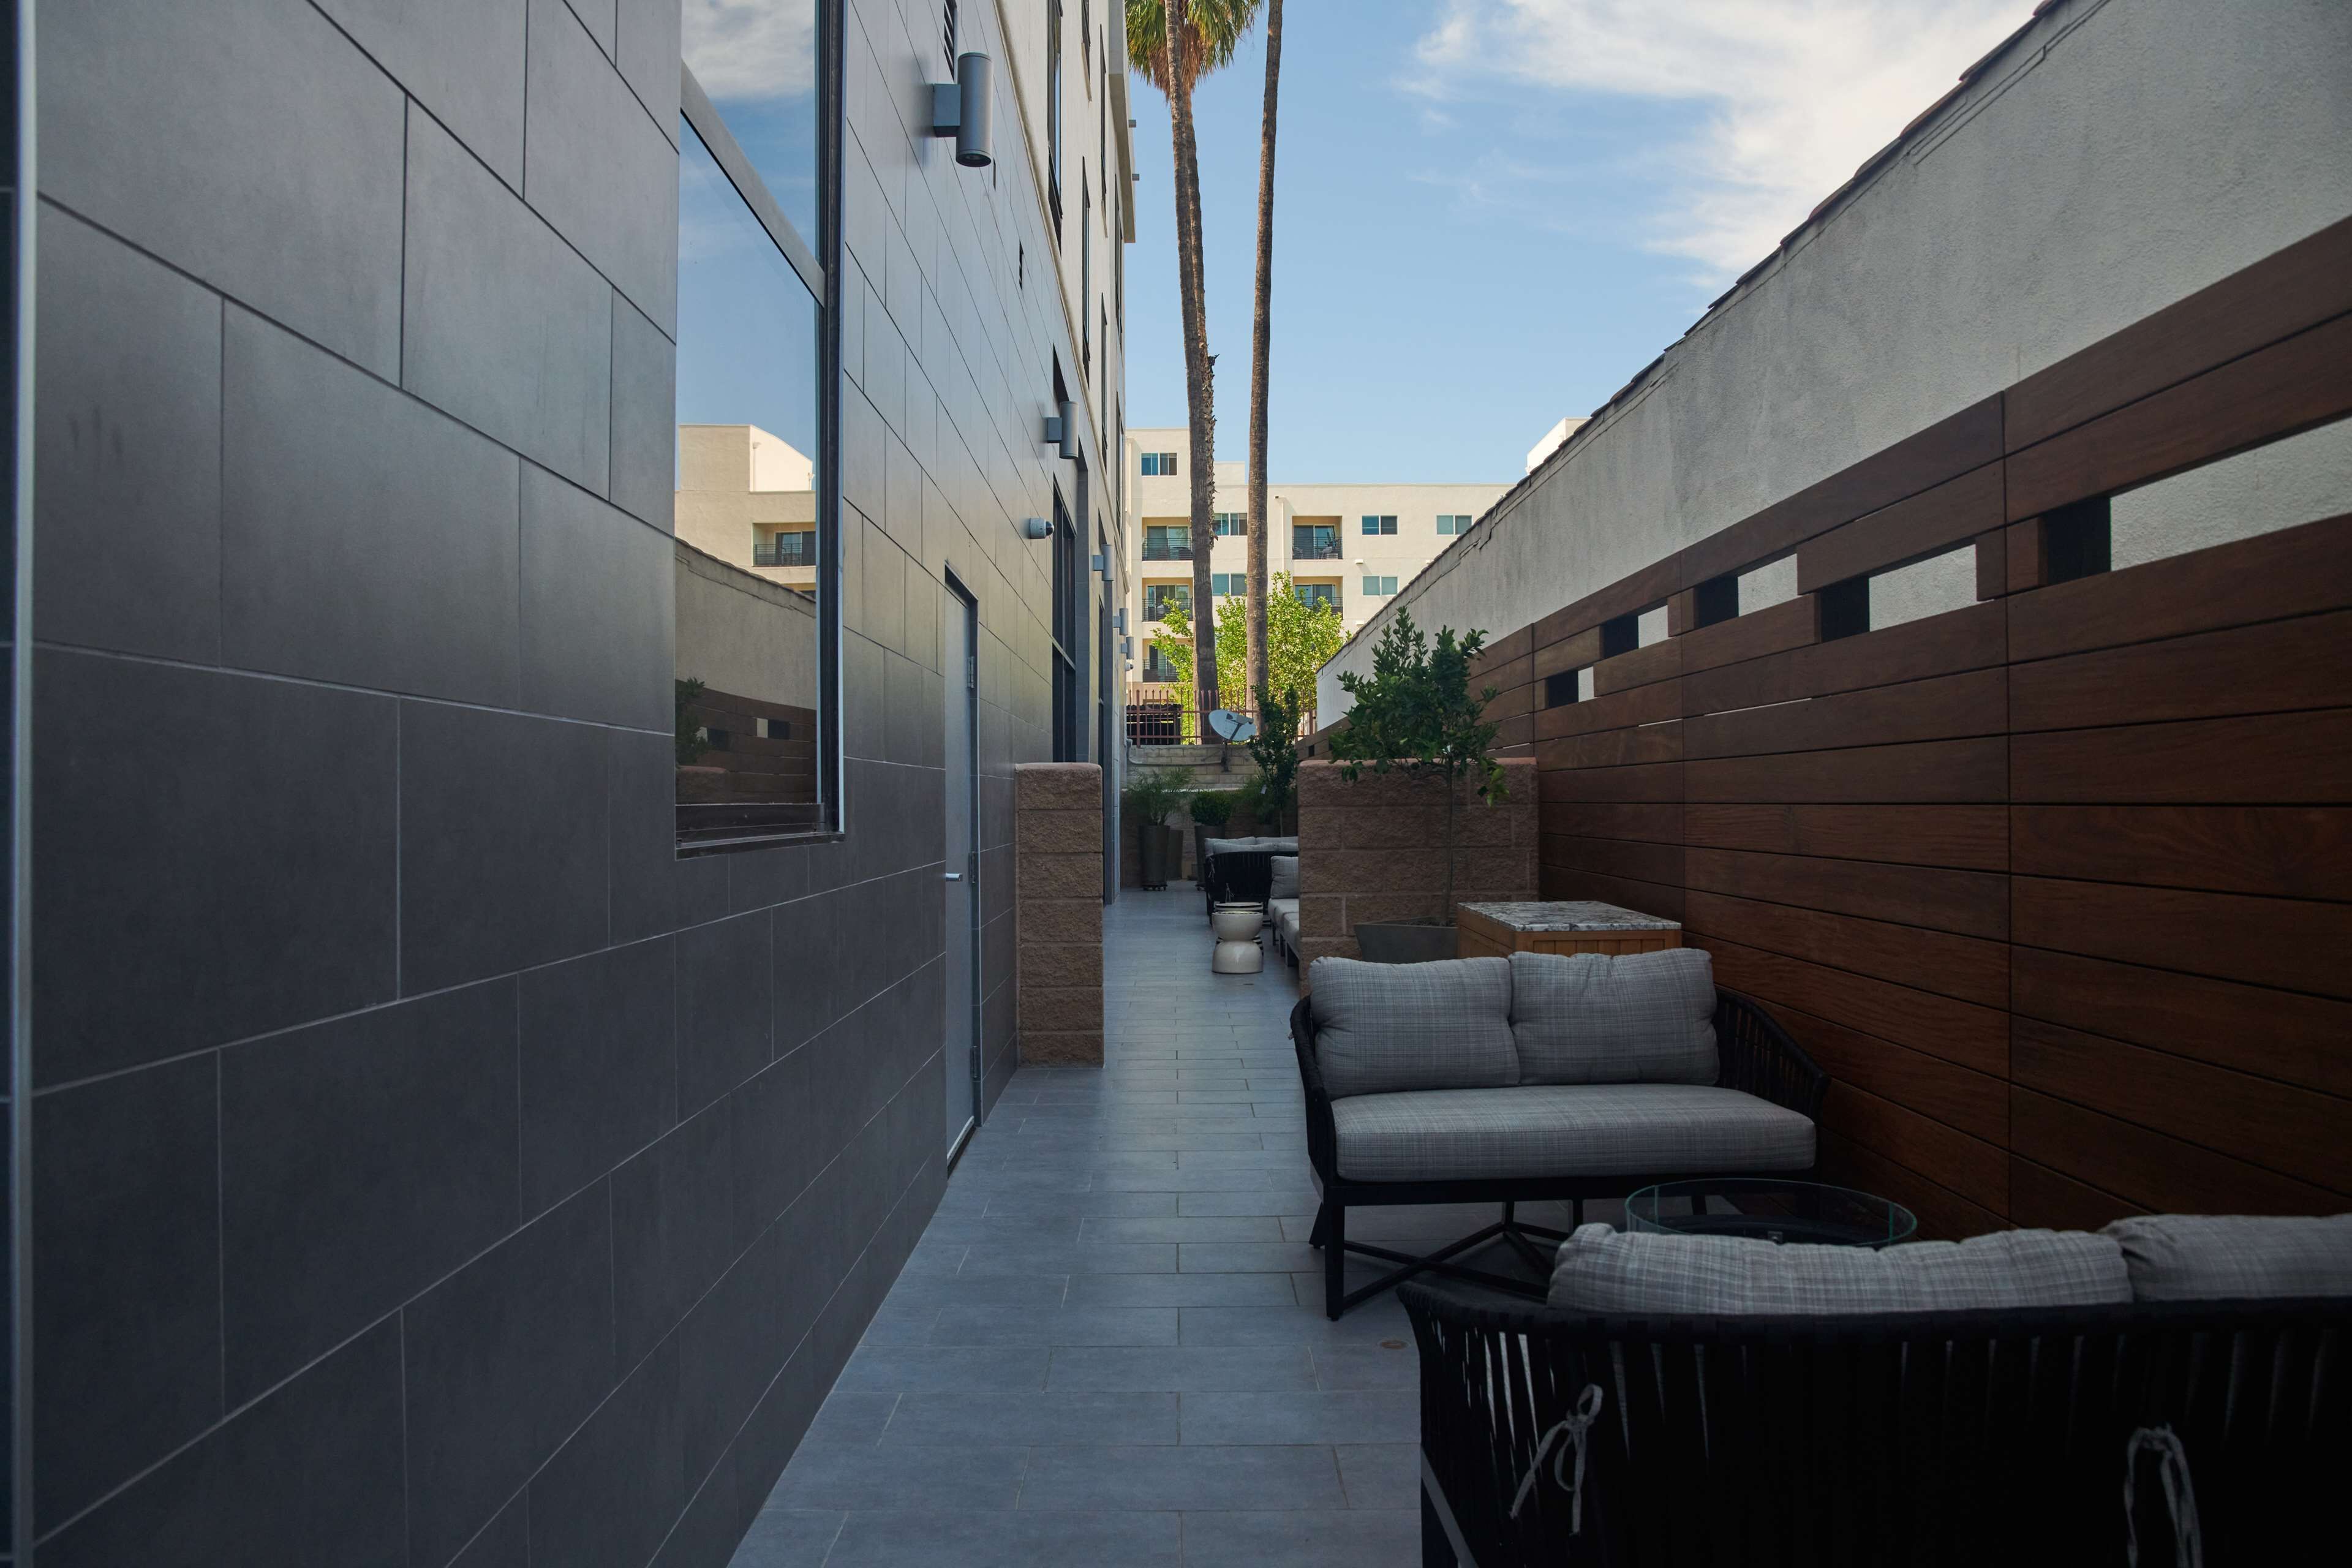 Hampton Inn & Suites Los Angeles/Sherman Oaks